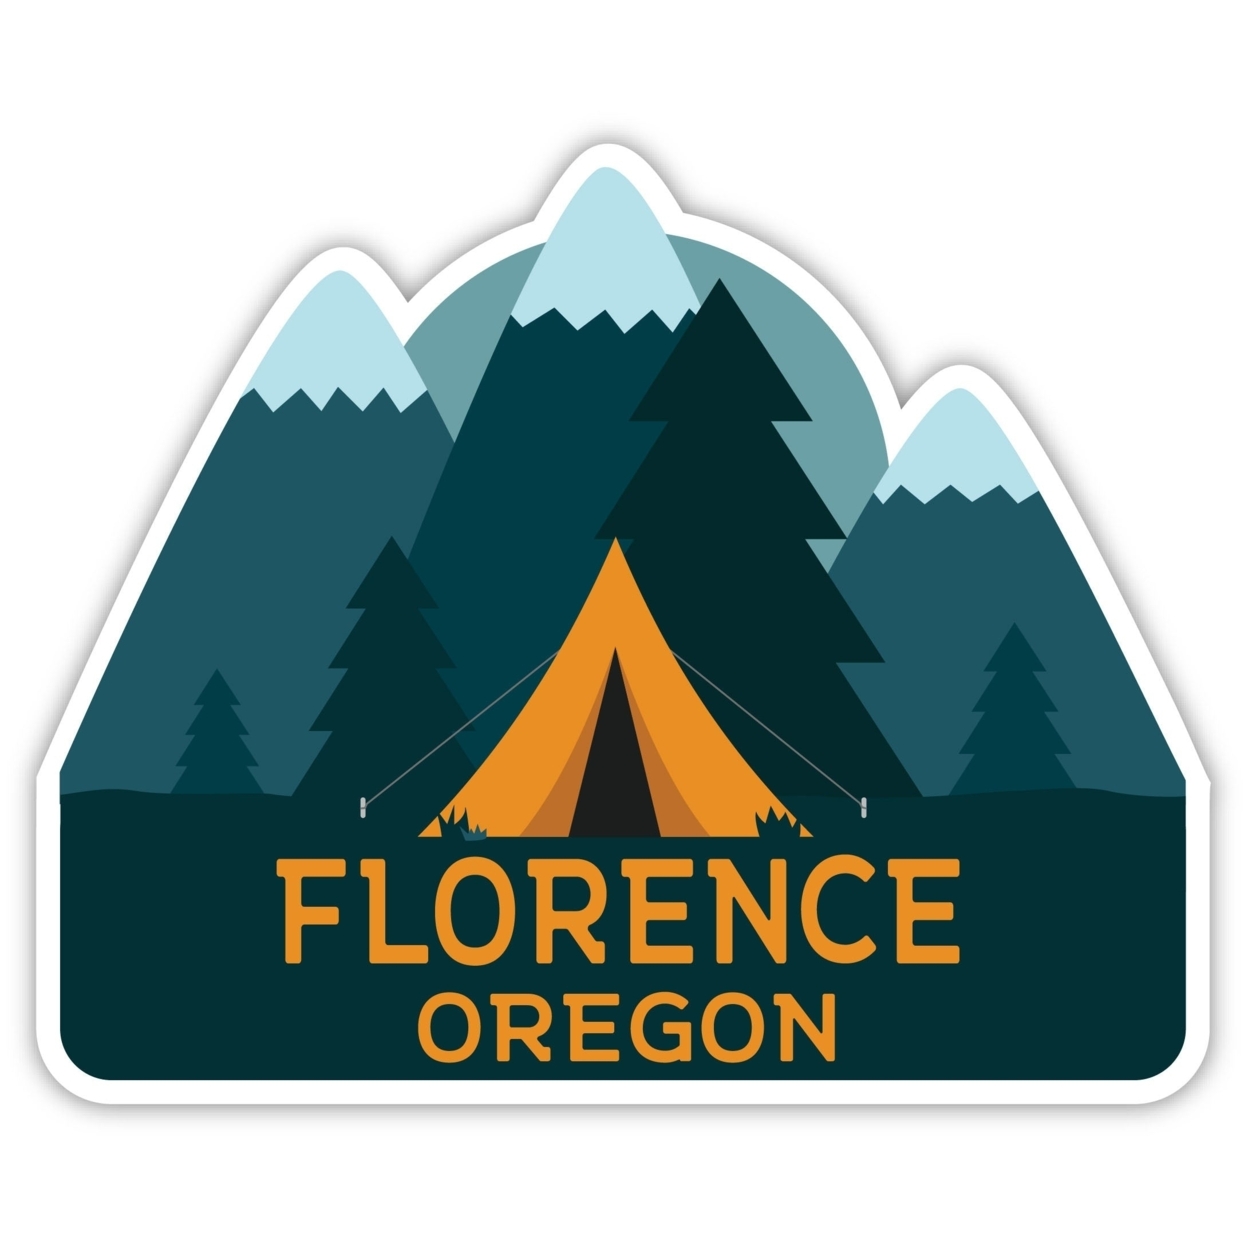 Florence Oregon Souvenir Decorative Stickers (Choose Theme And Size) - Single Unit, 12-Inch, Adventures Awaits